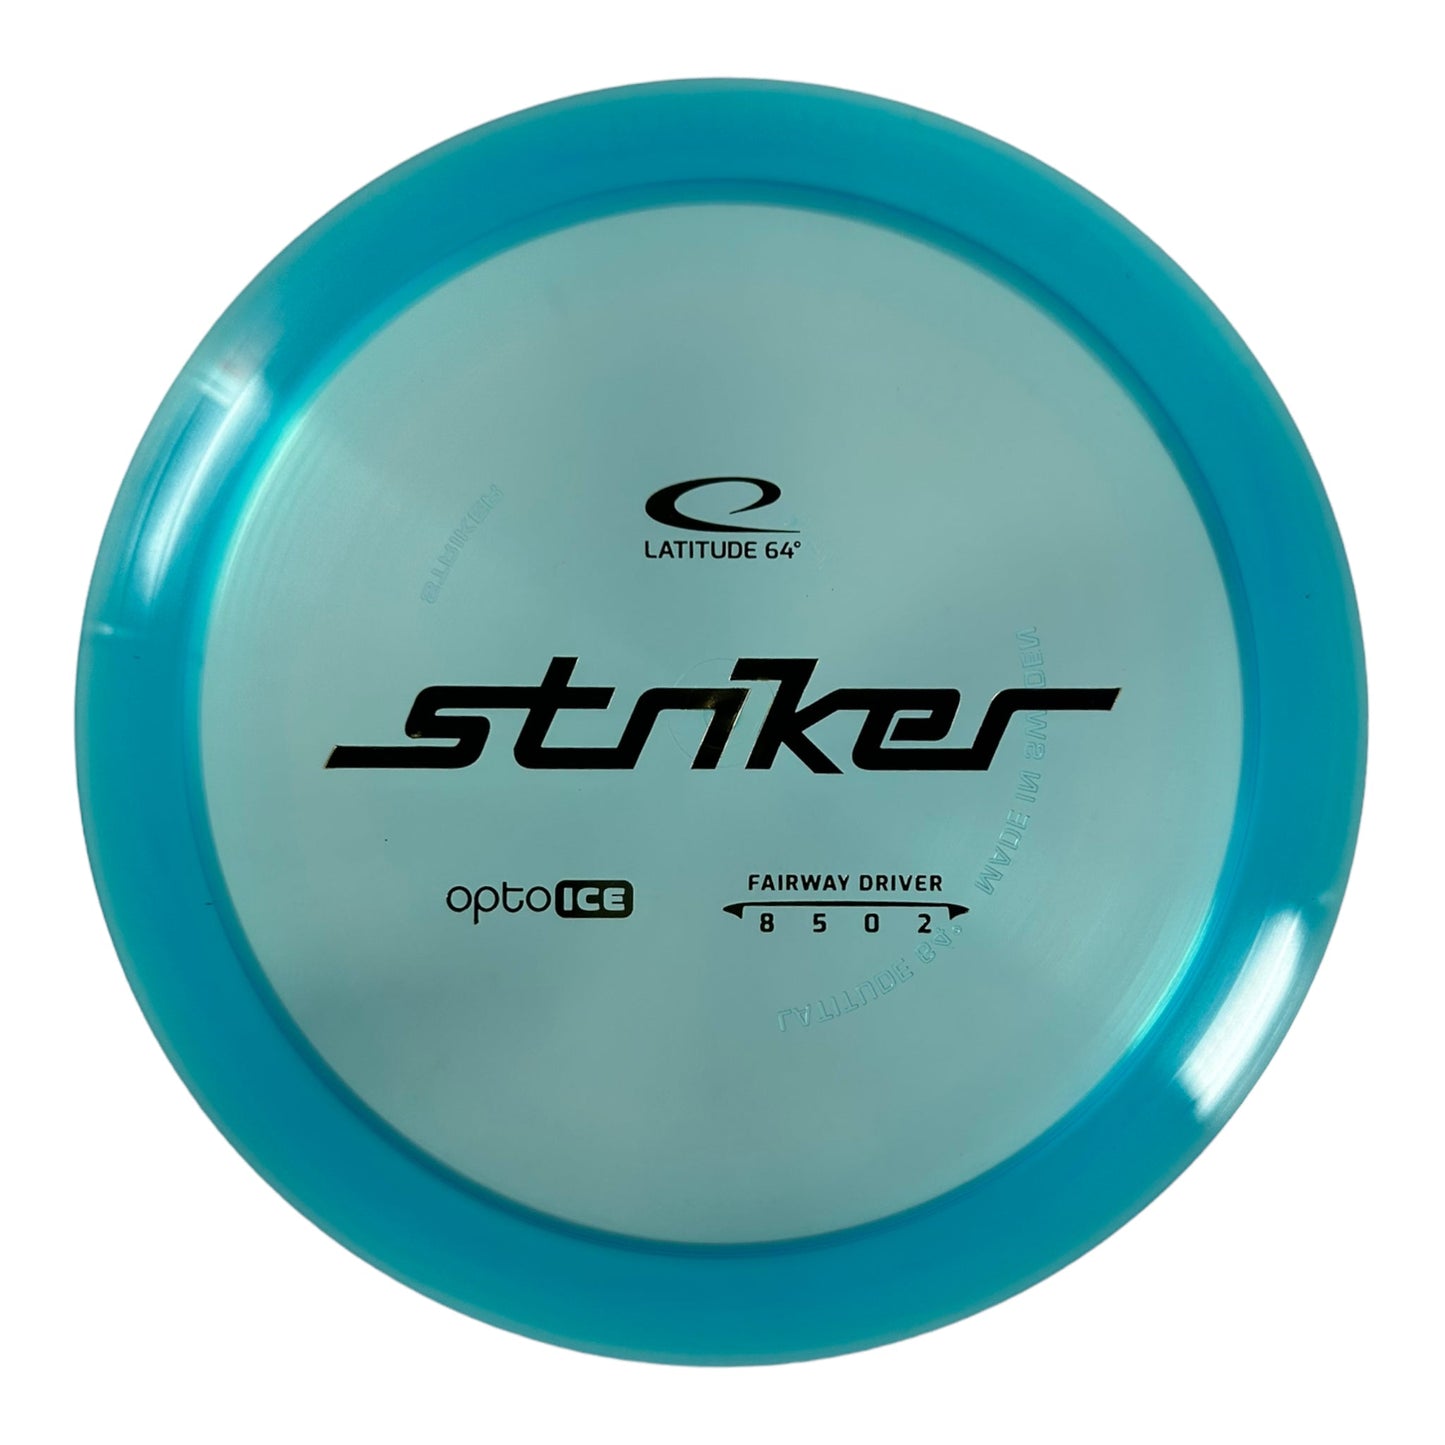 Latitude 64 Striker | Opto ICE | Blue/Gold 174g Disc Golf